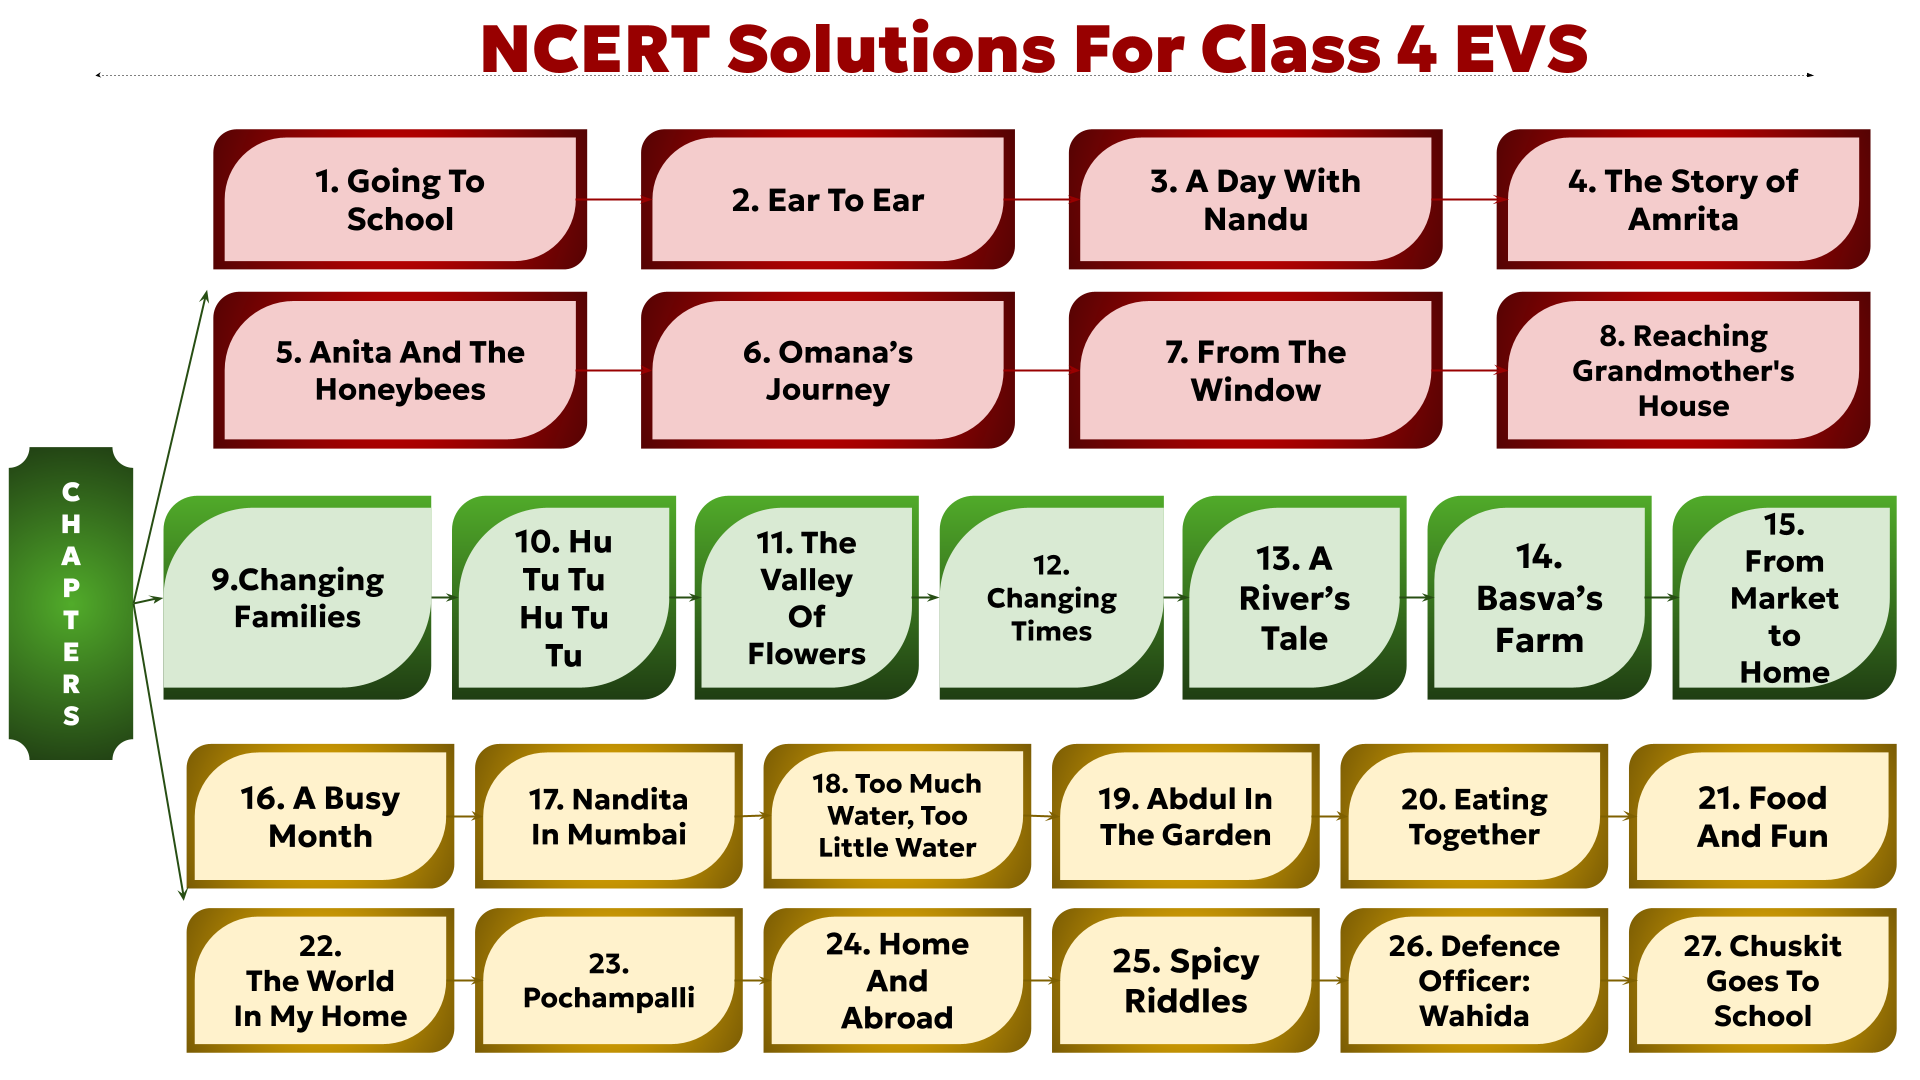 Overview of NCERT Class 4 EVS